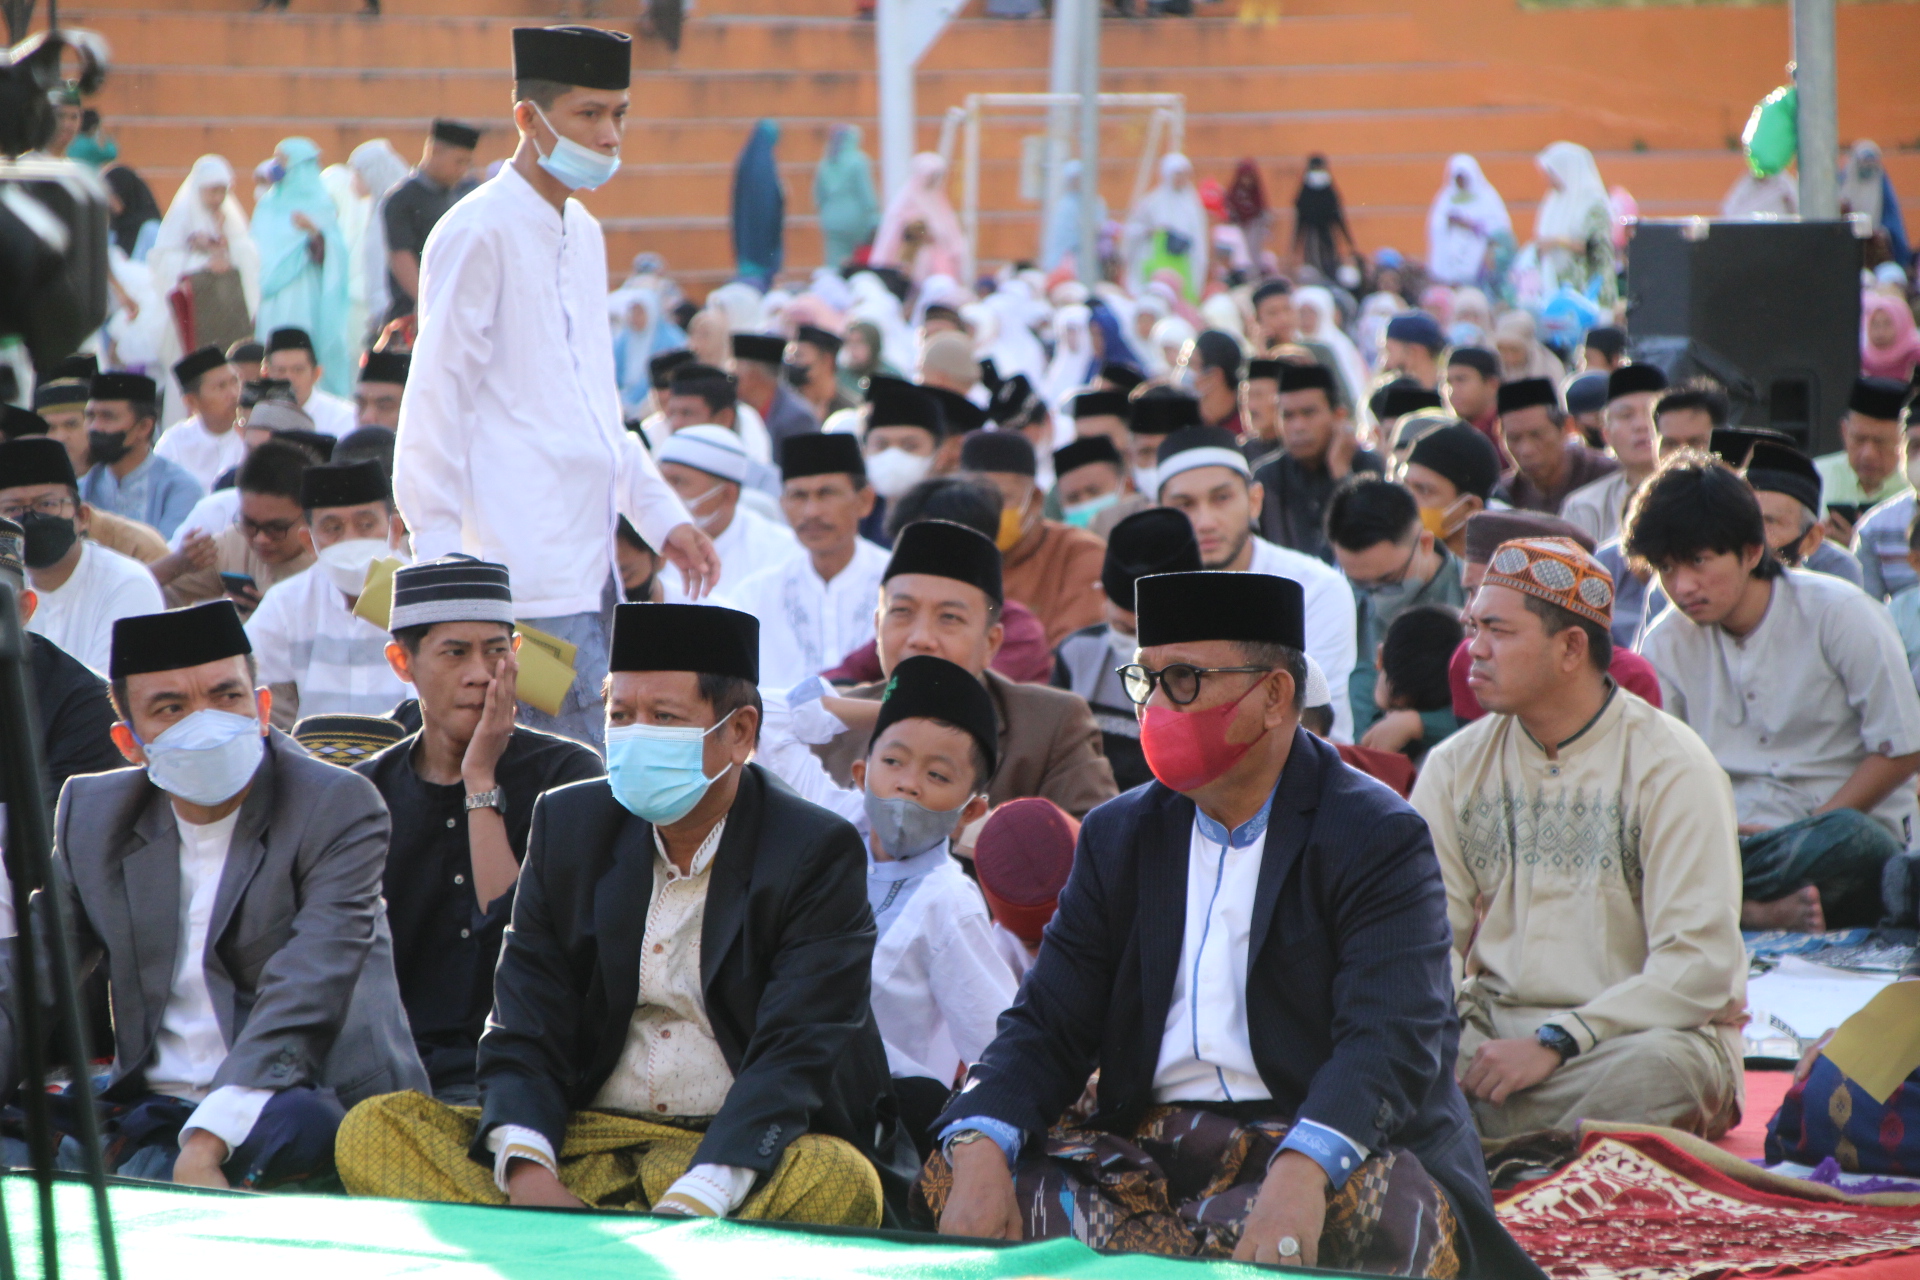 Bupati dan Wabup Shalat Idul Fitri di Lapangan Gasis Soppeng